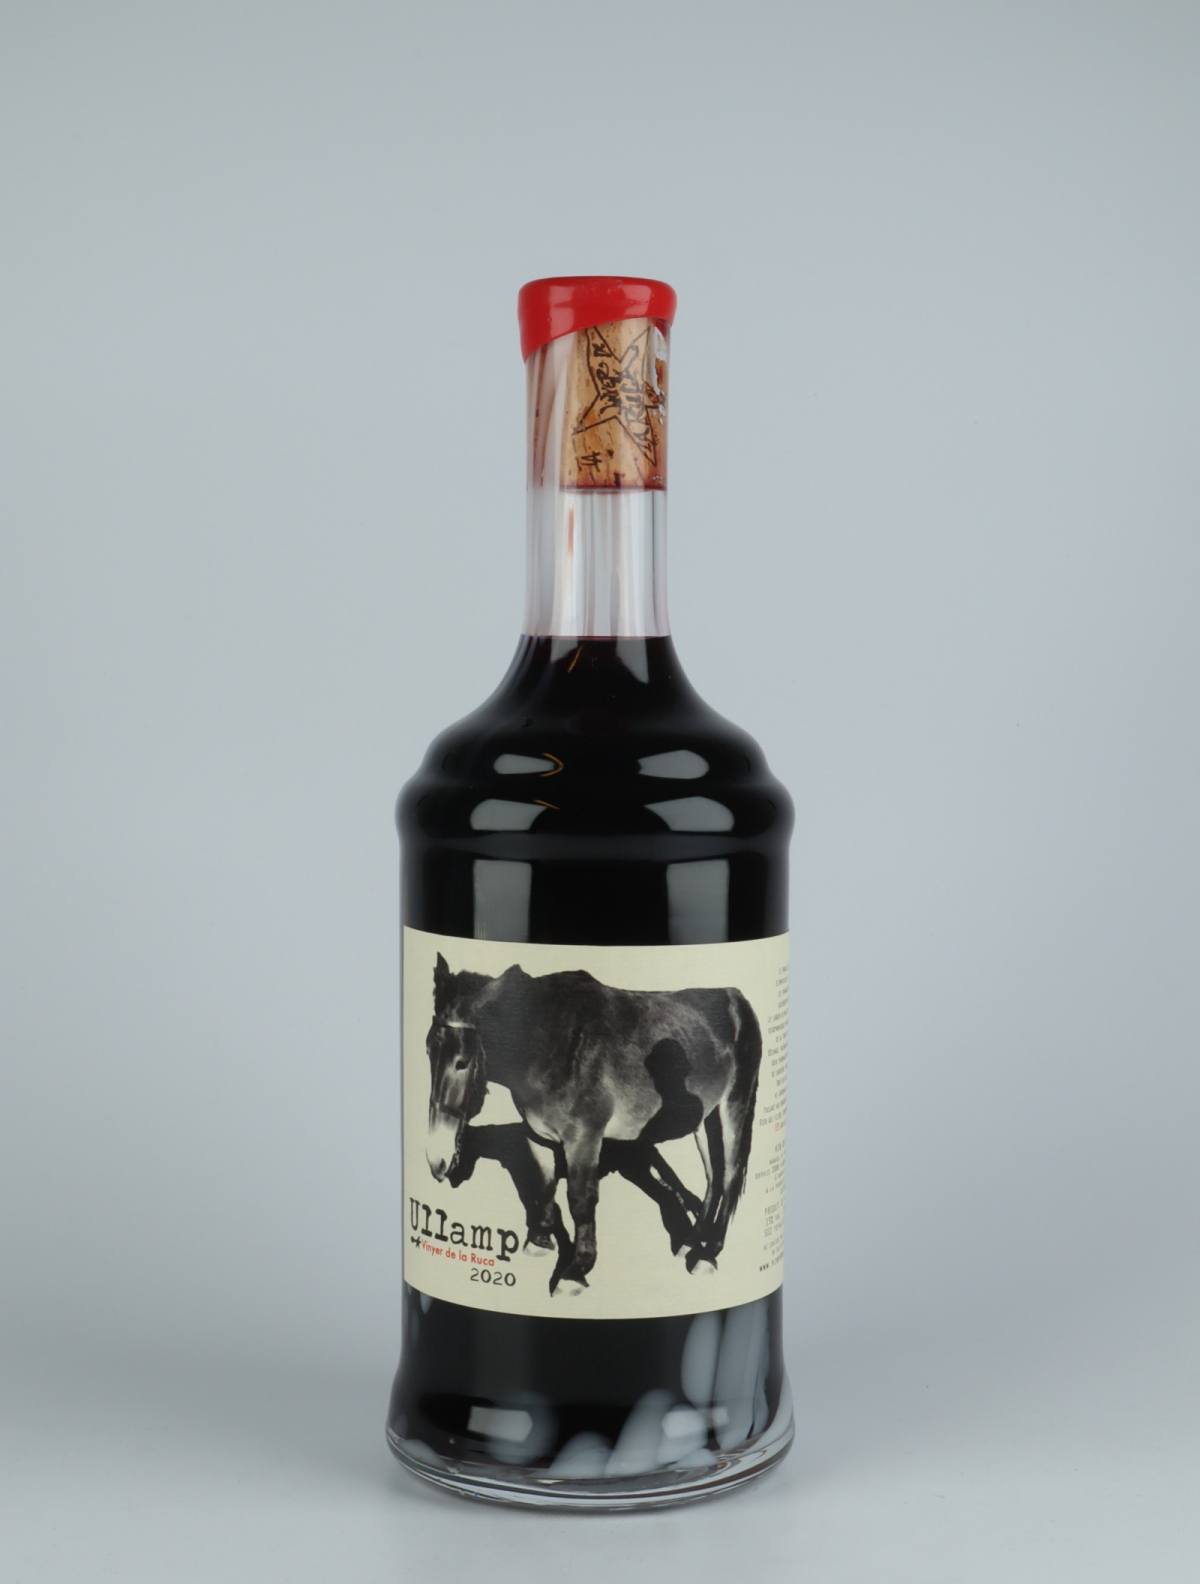 A bottle 2020 Ullamp Red wine from Vinyer de la Ruca, Rousillon in France